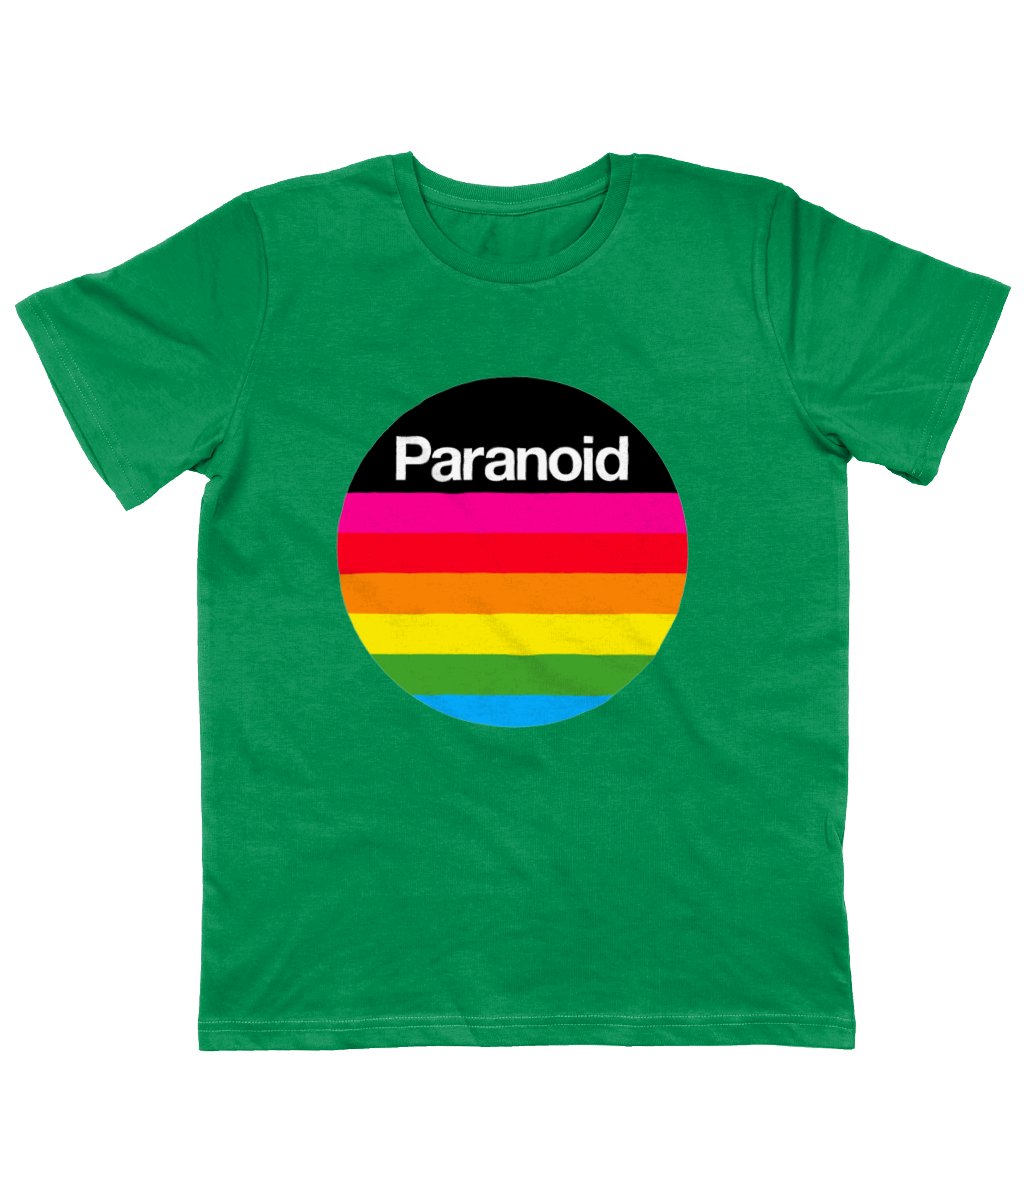 Paranoid - Kids